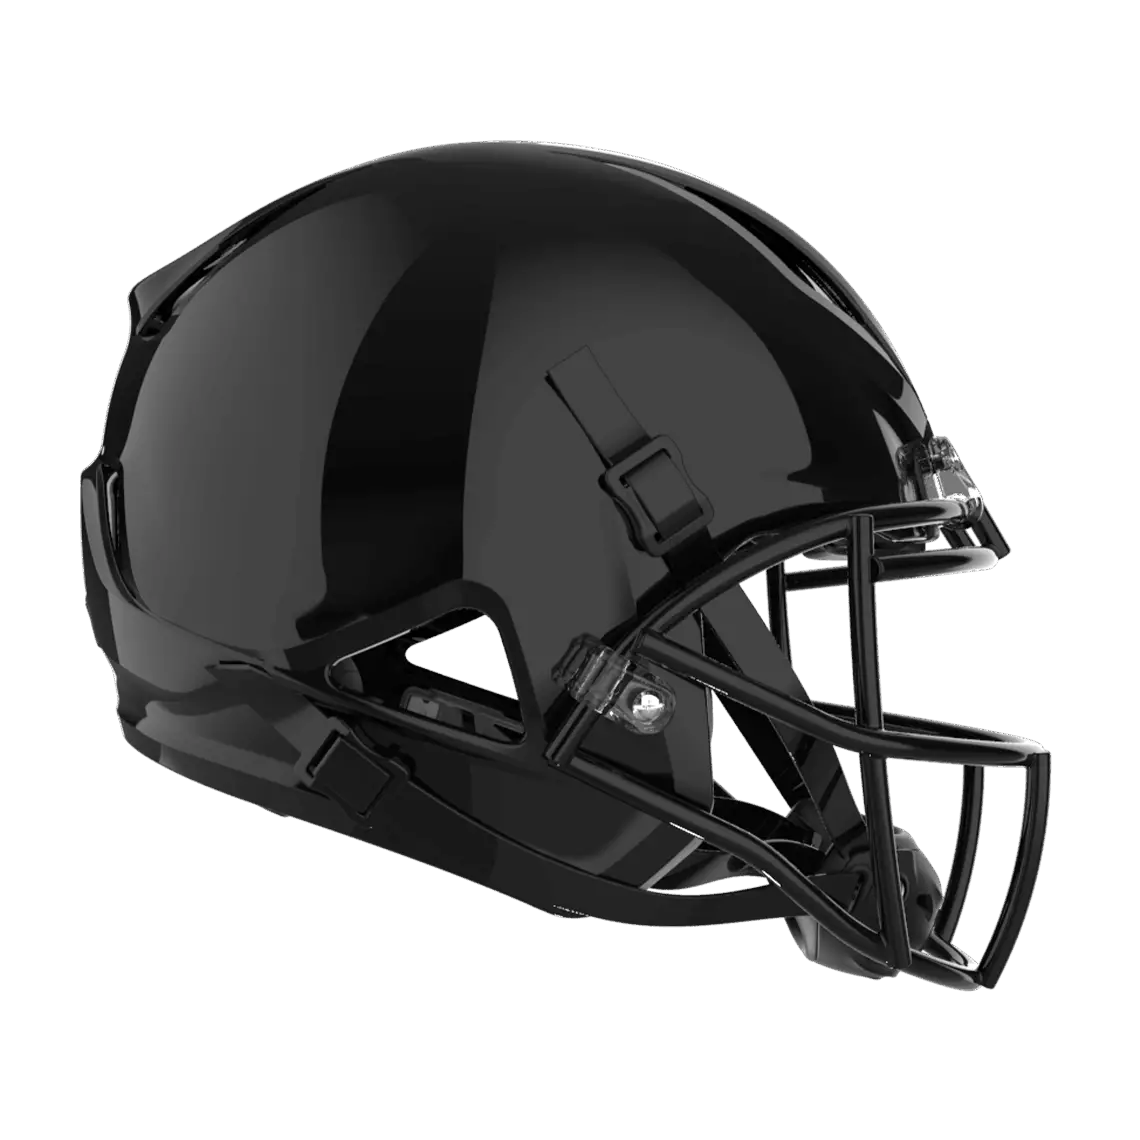 Riddell Speed Flex Adult Football Helmet – American Konnection